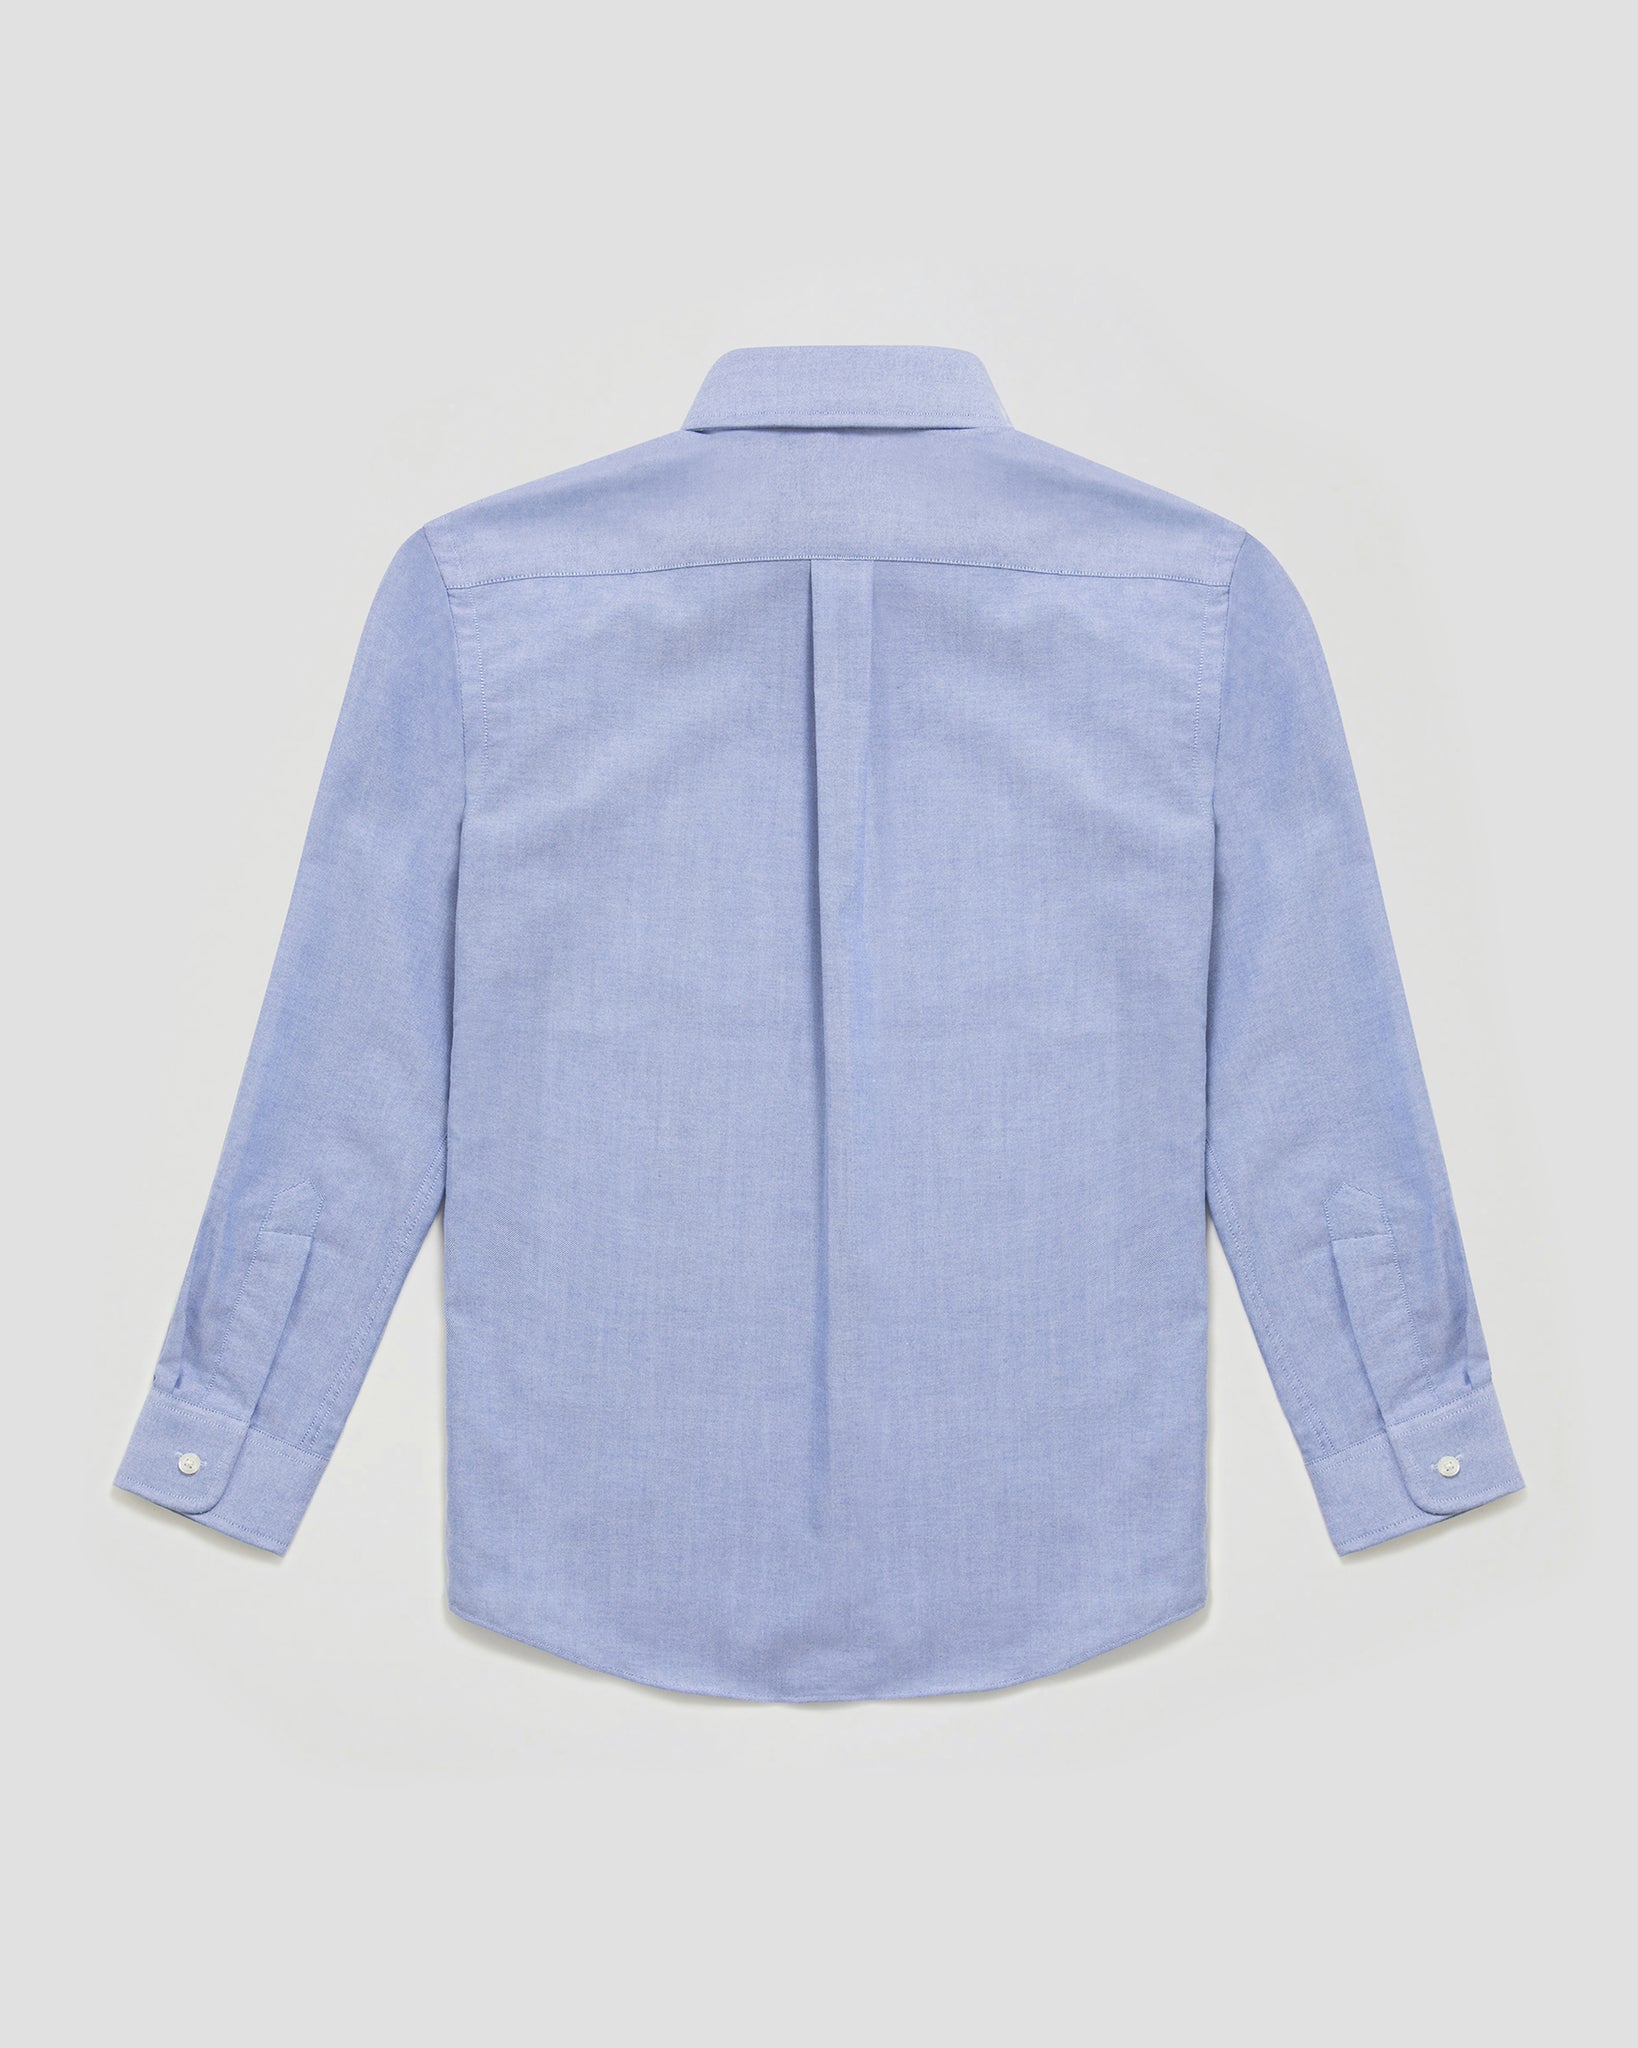 MagnaClick Solid Prep Shirt (Kids) - Blue